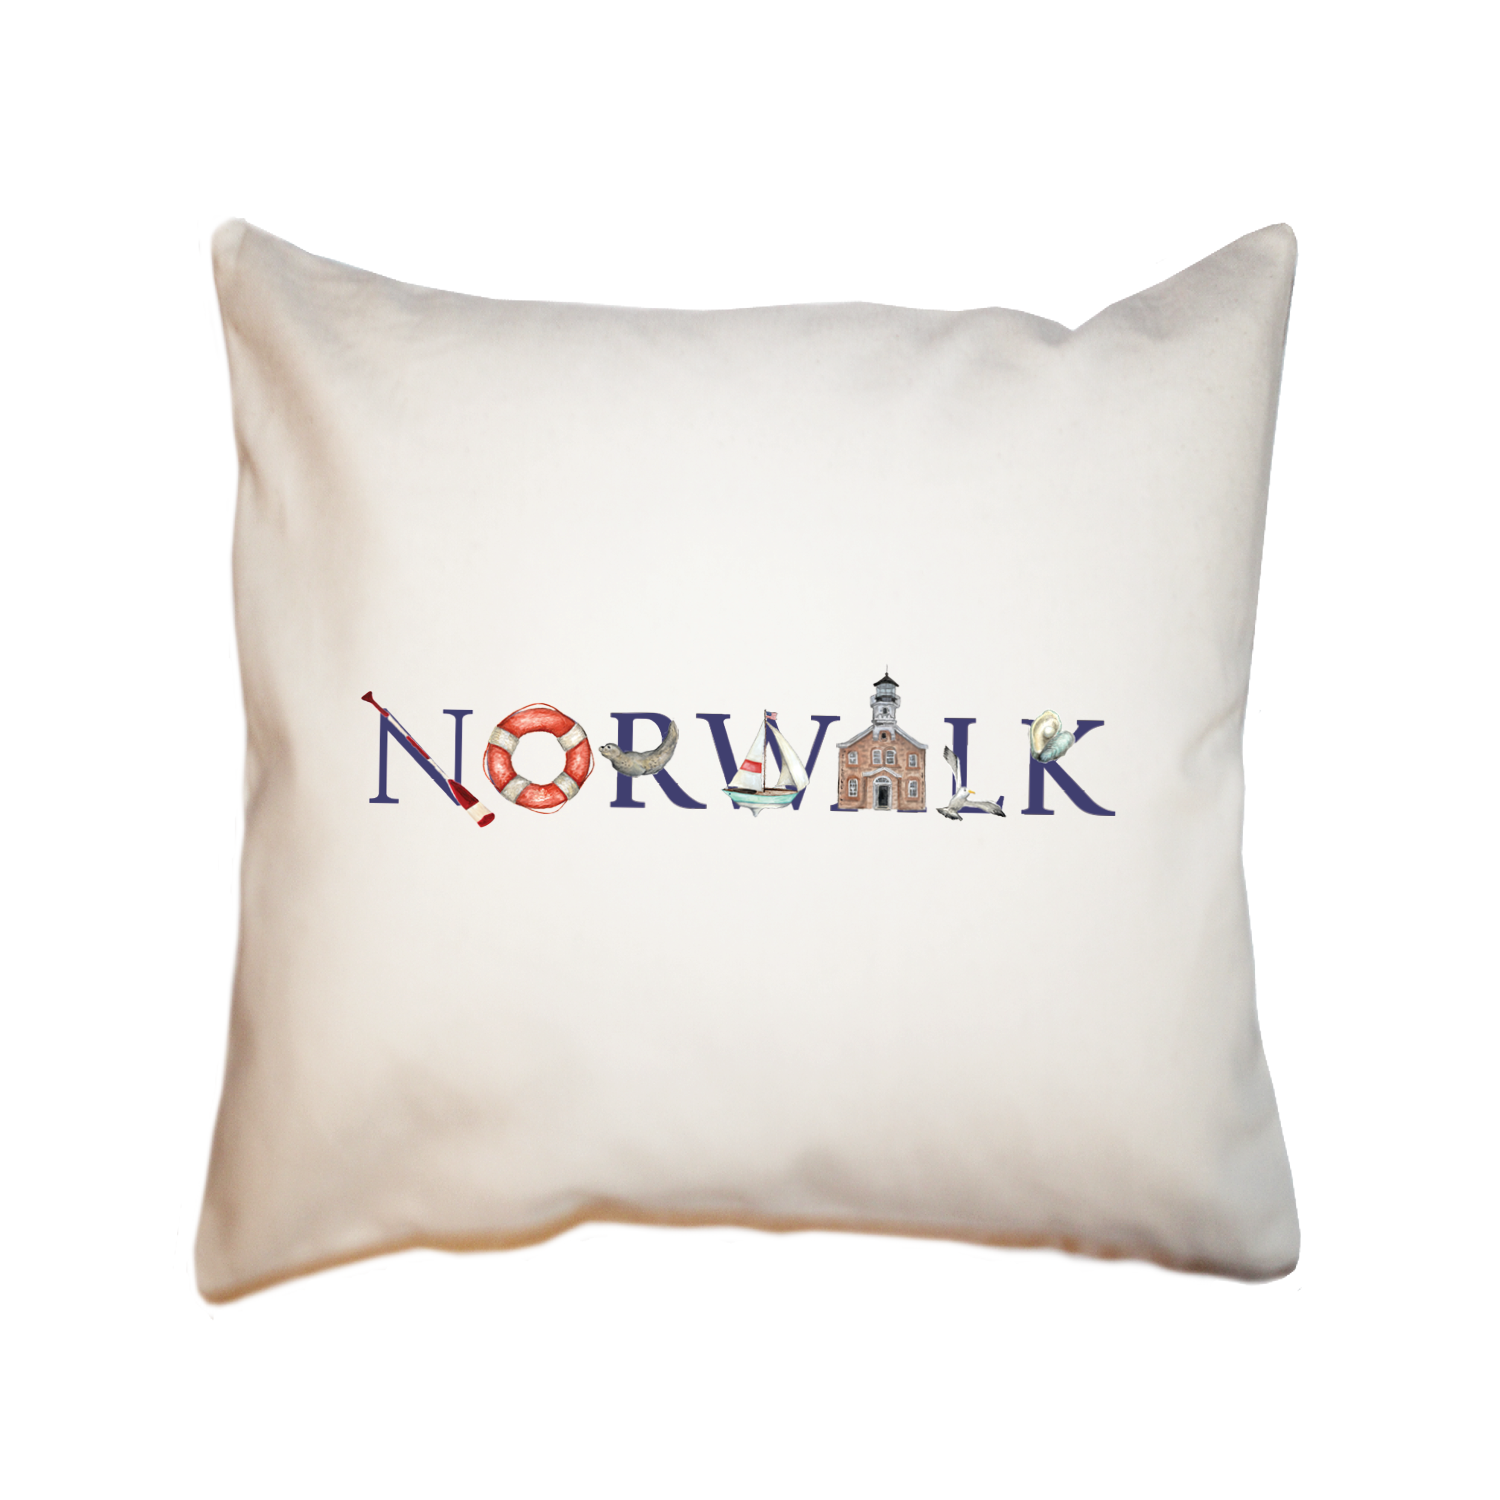 norwalk square pillow